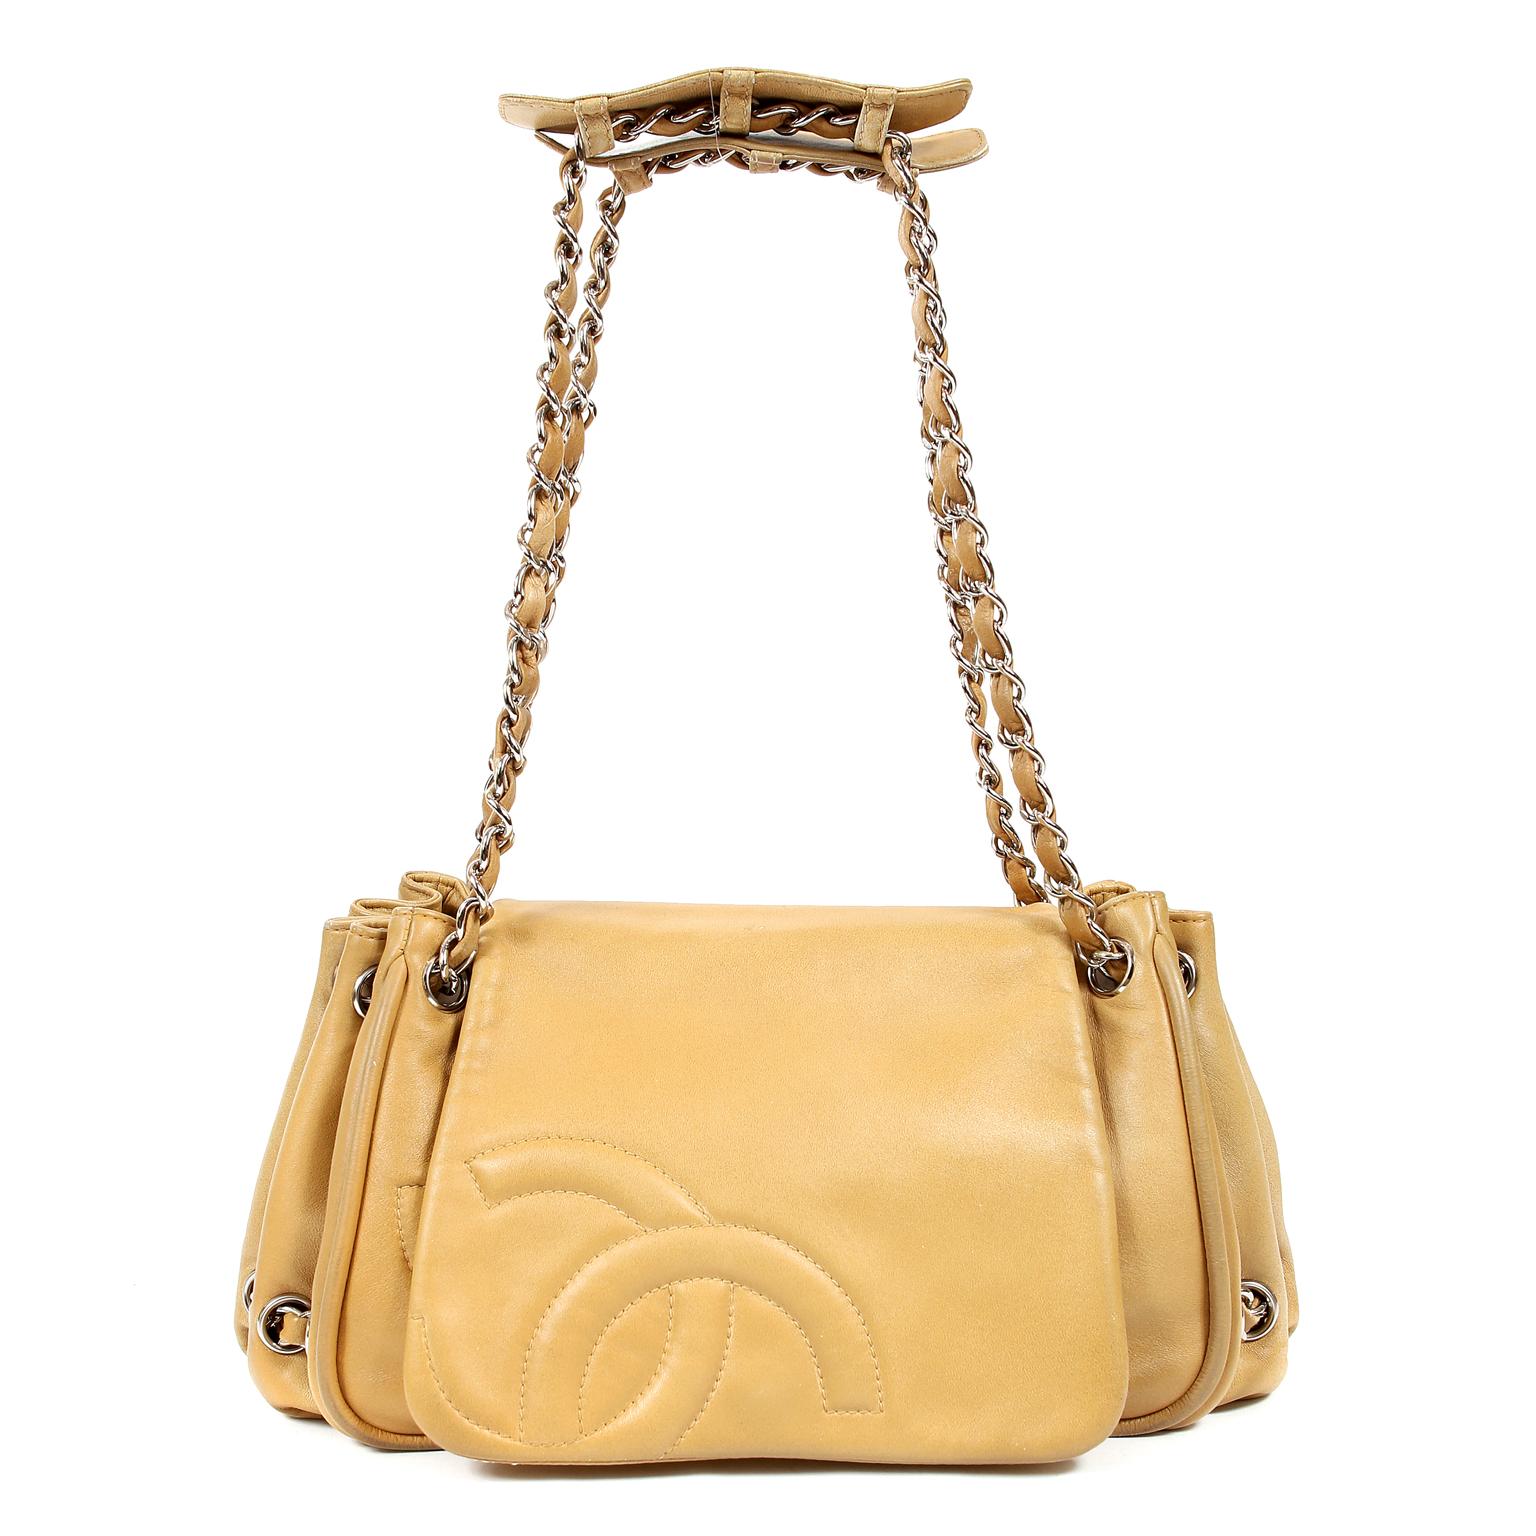 Women's Chanel Beige Leather Accordion Flap Bag